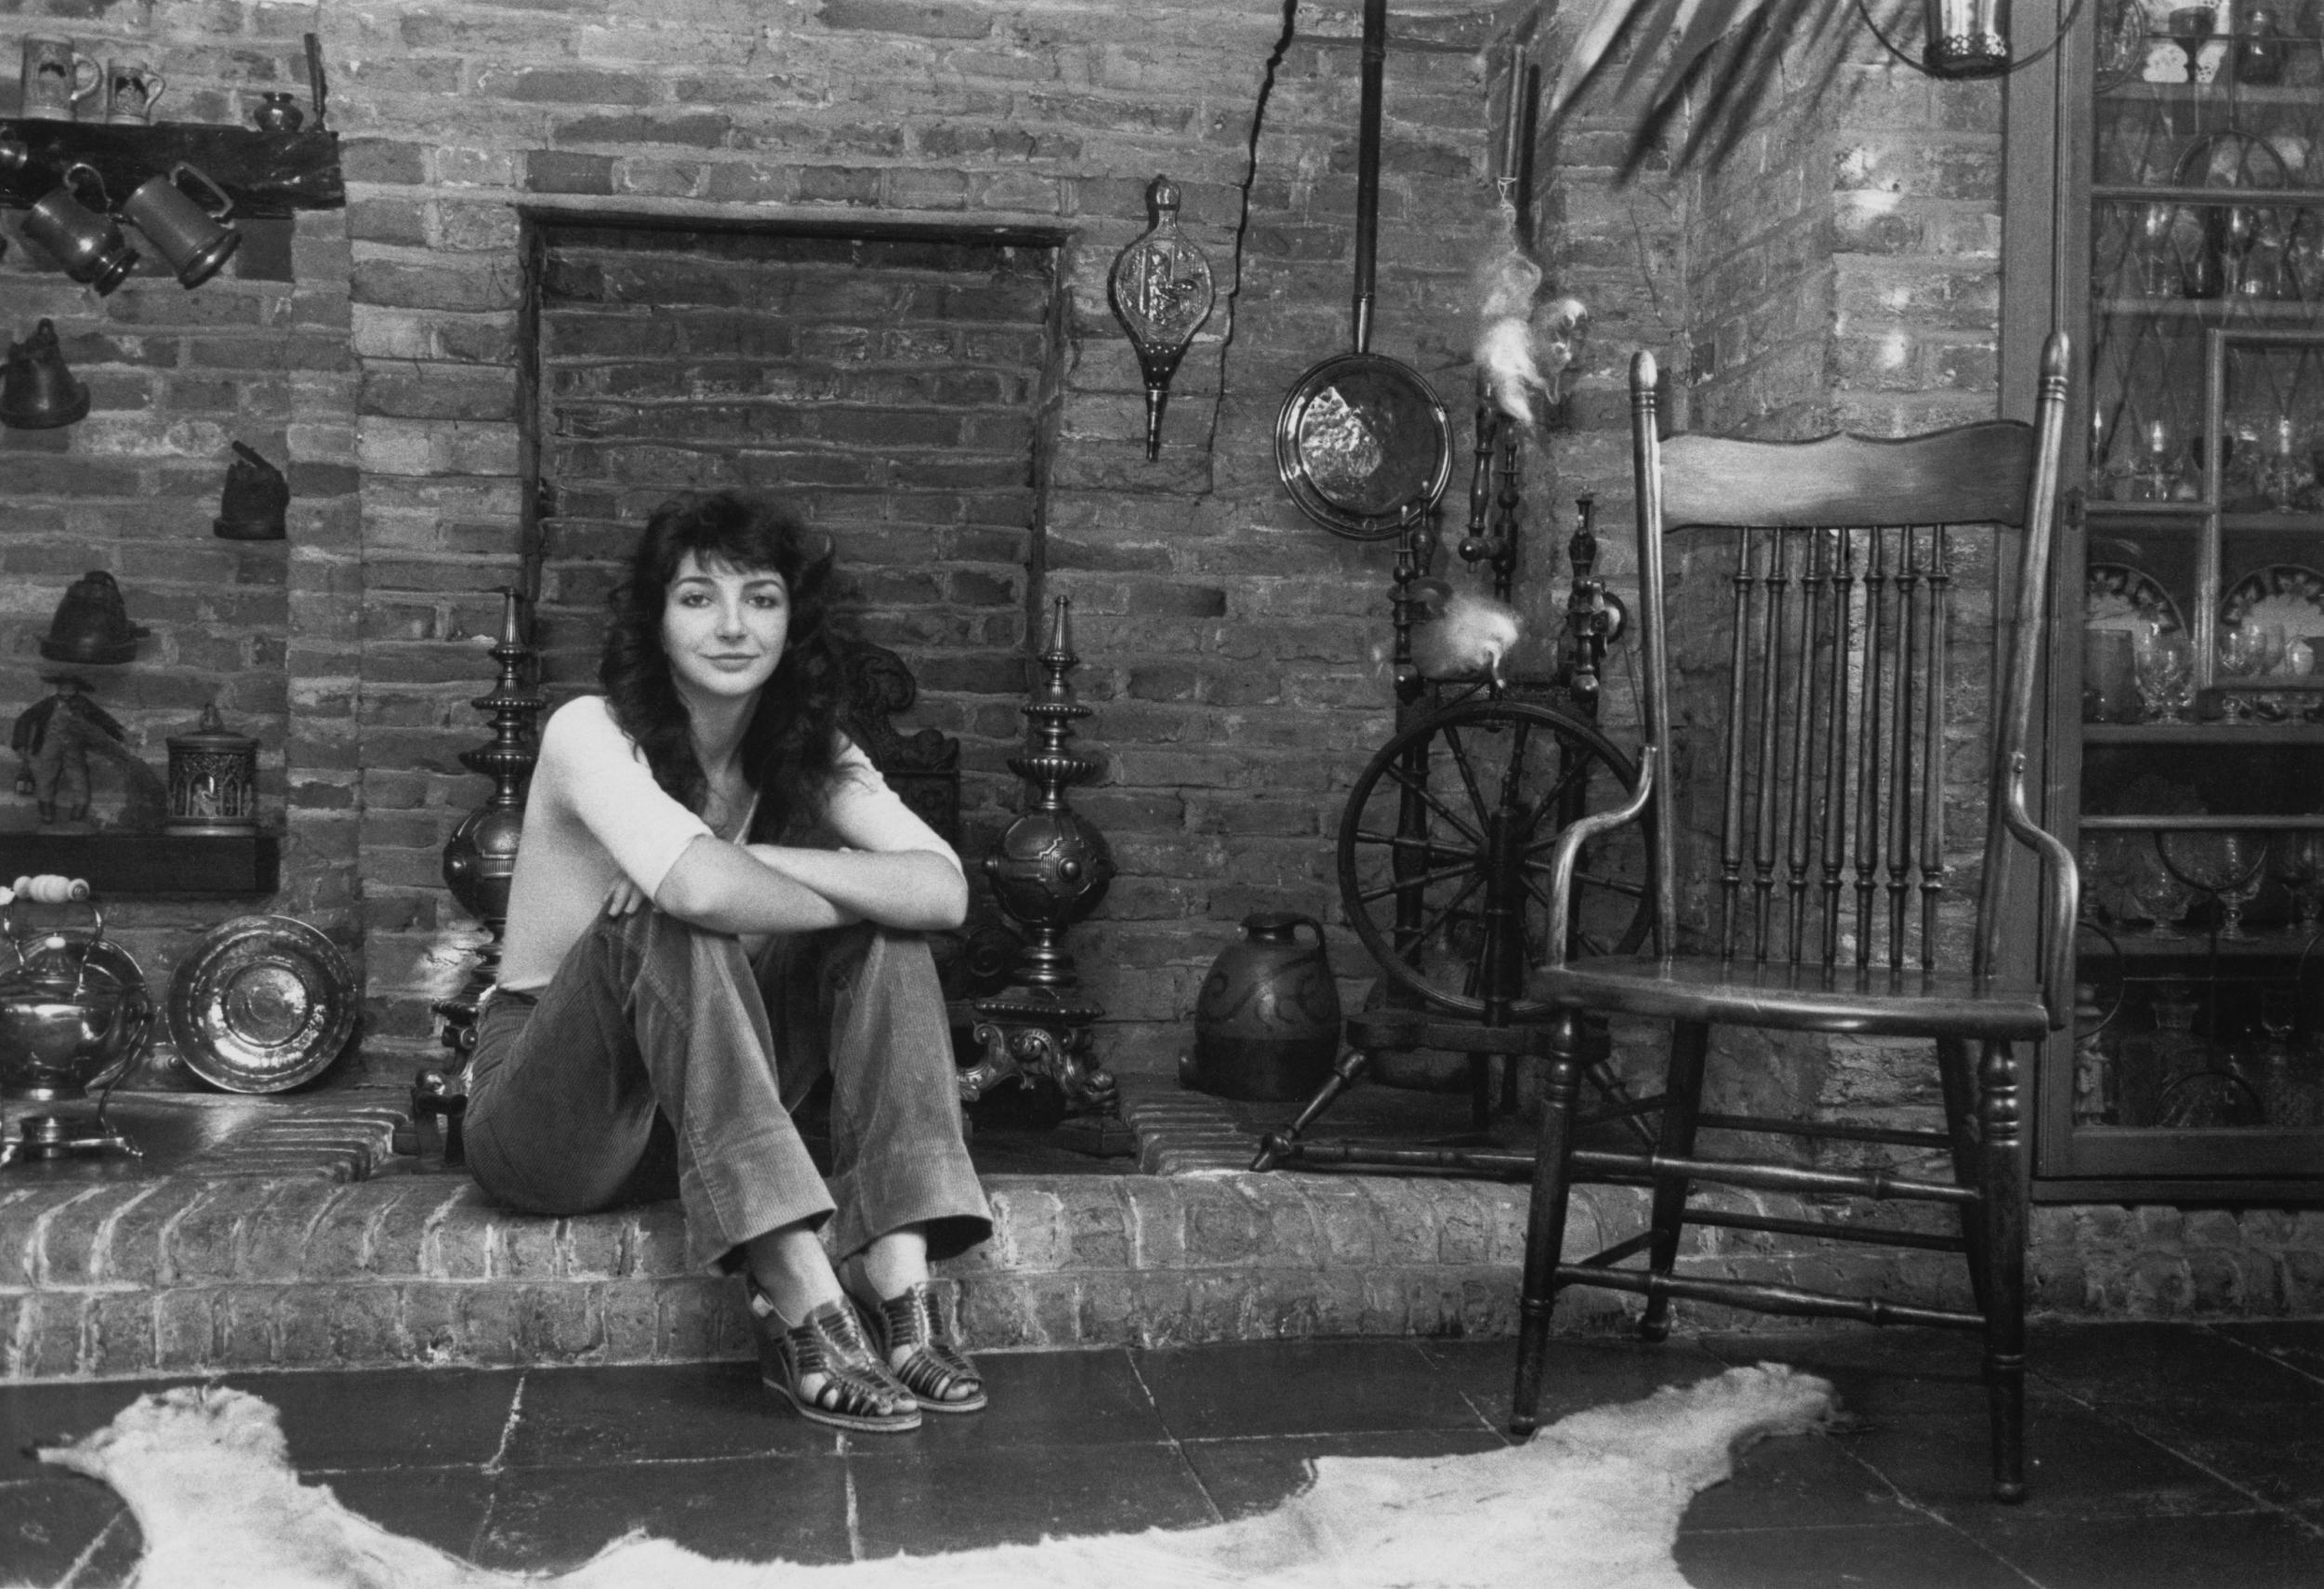 Kate Bush, Hounds of Love album cover photoshoot, 1985. Photograph